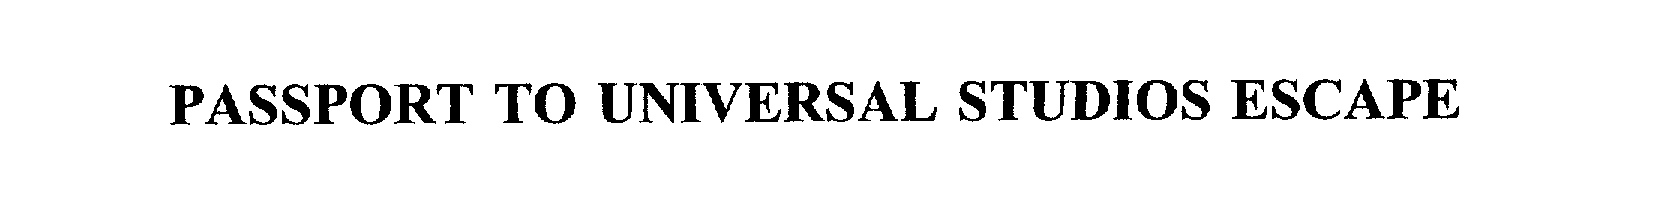  PASSPORT TO UNIVERSAL STUDIOS ESCAPE